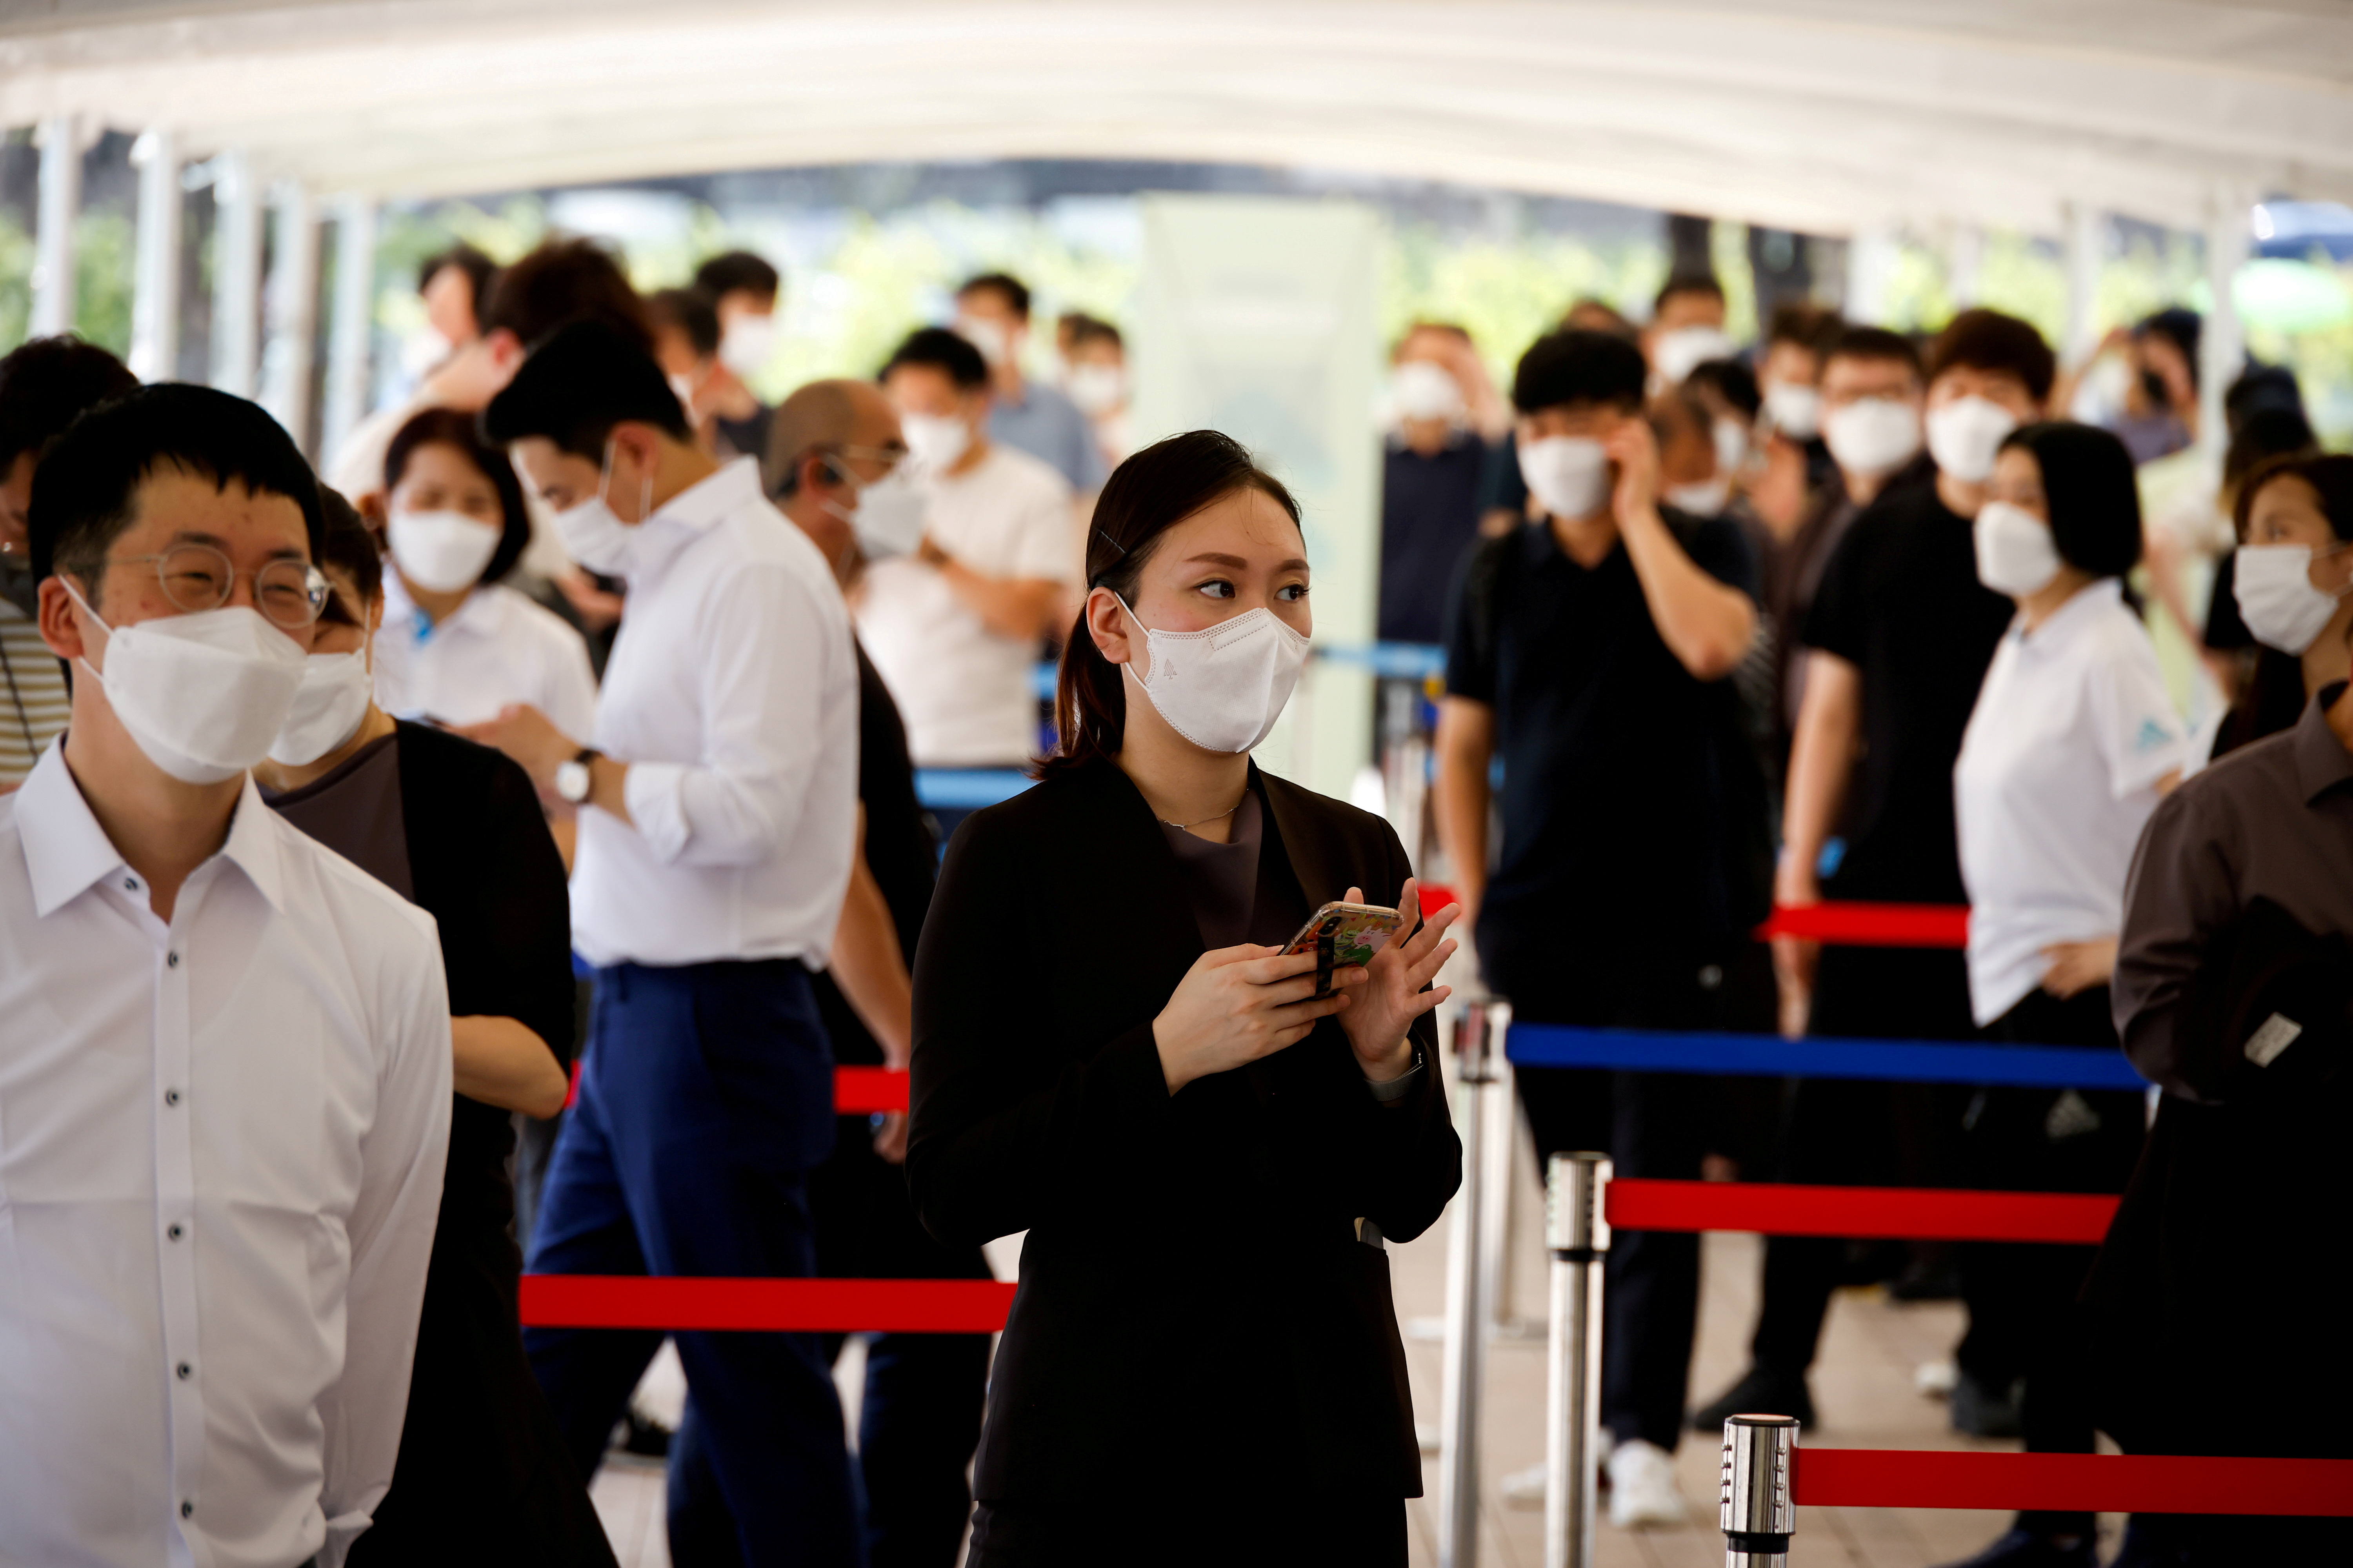 FILE PHOTO: People wait in line to get coronavirus disease (COVID-19) test at a coronavirus testing site in Seoul